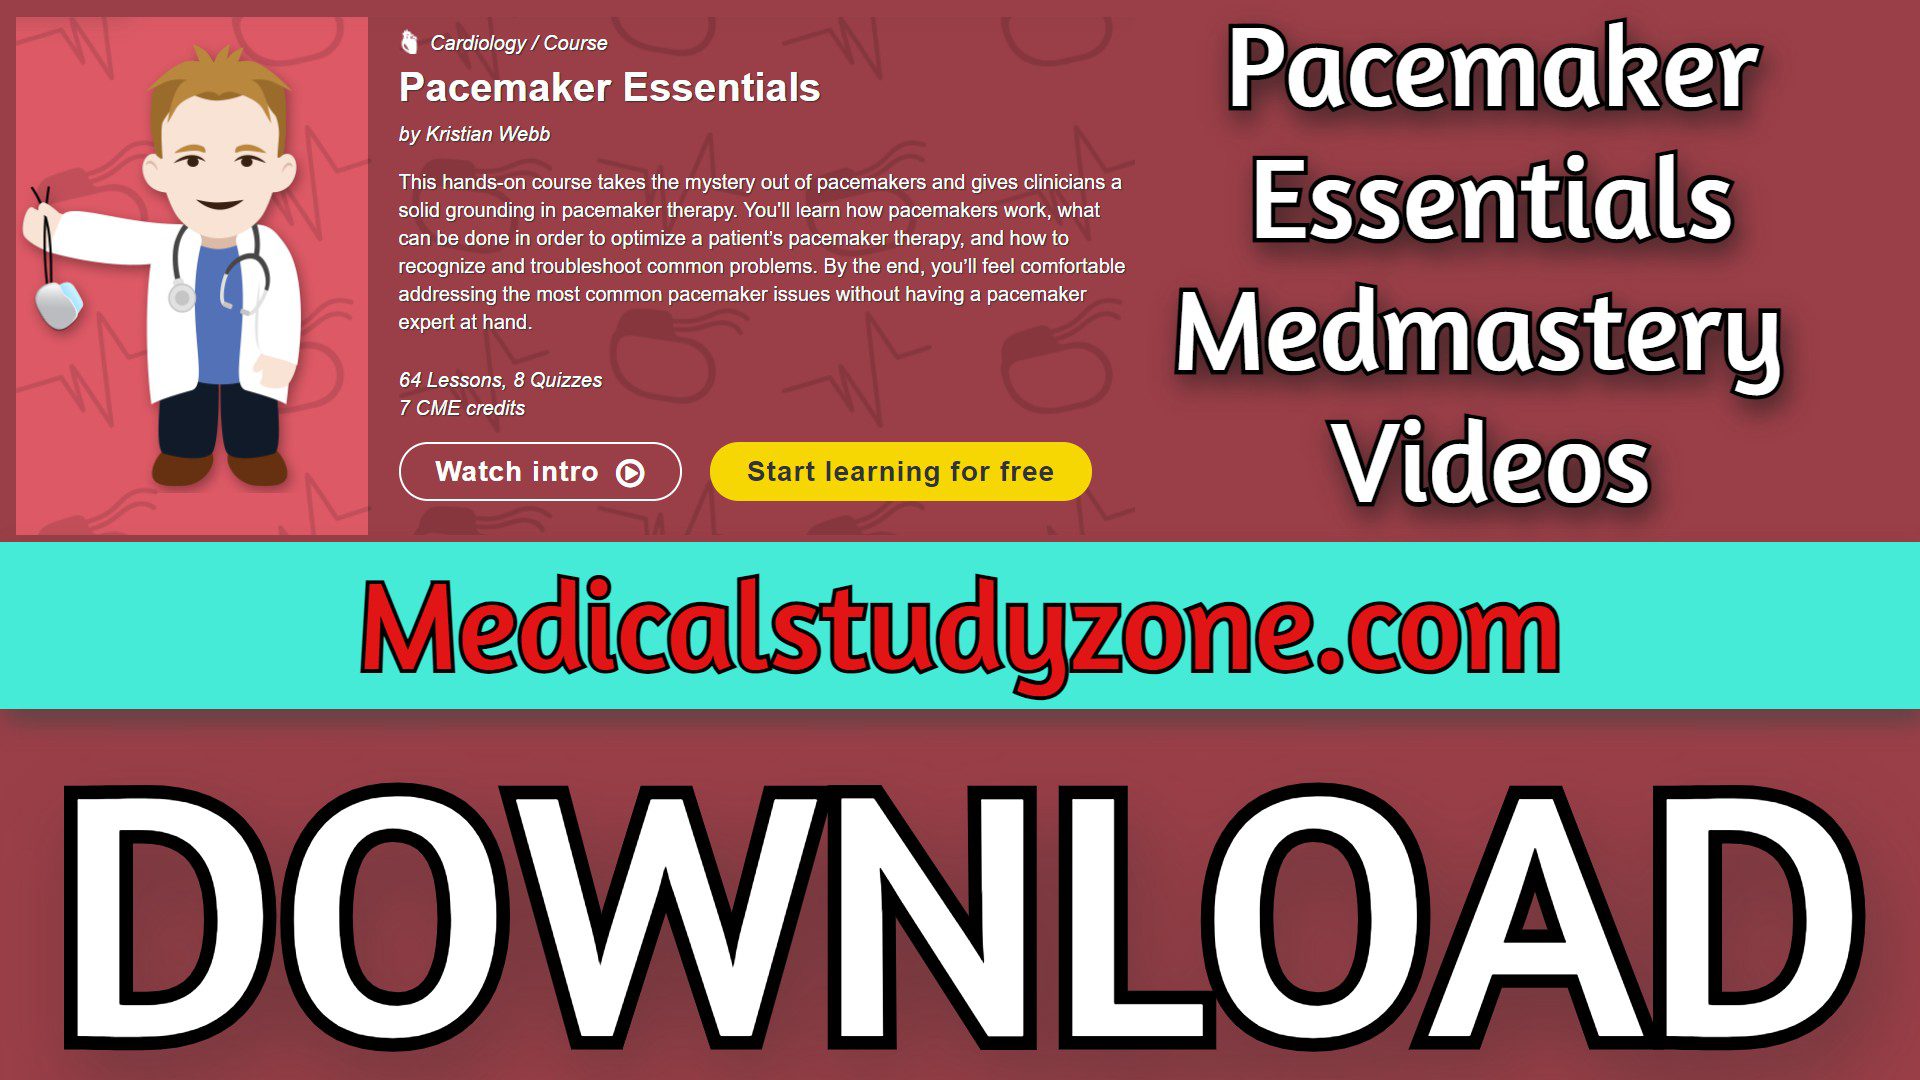 Pacemaker Essentials | Medmastery 2021 Videos Free Download